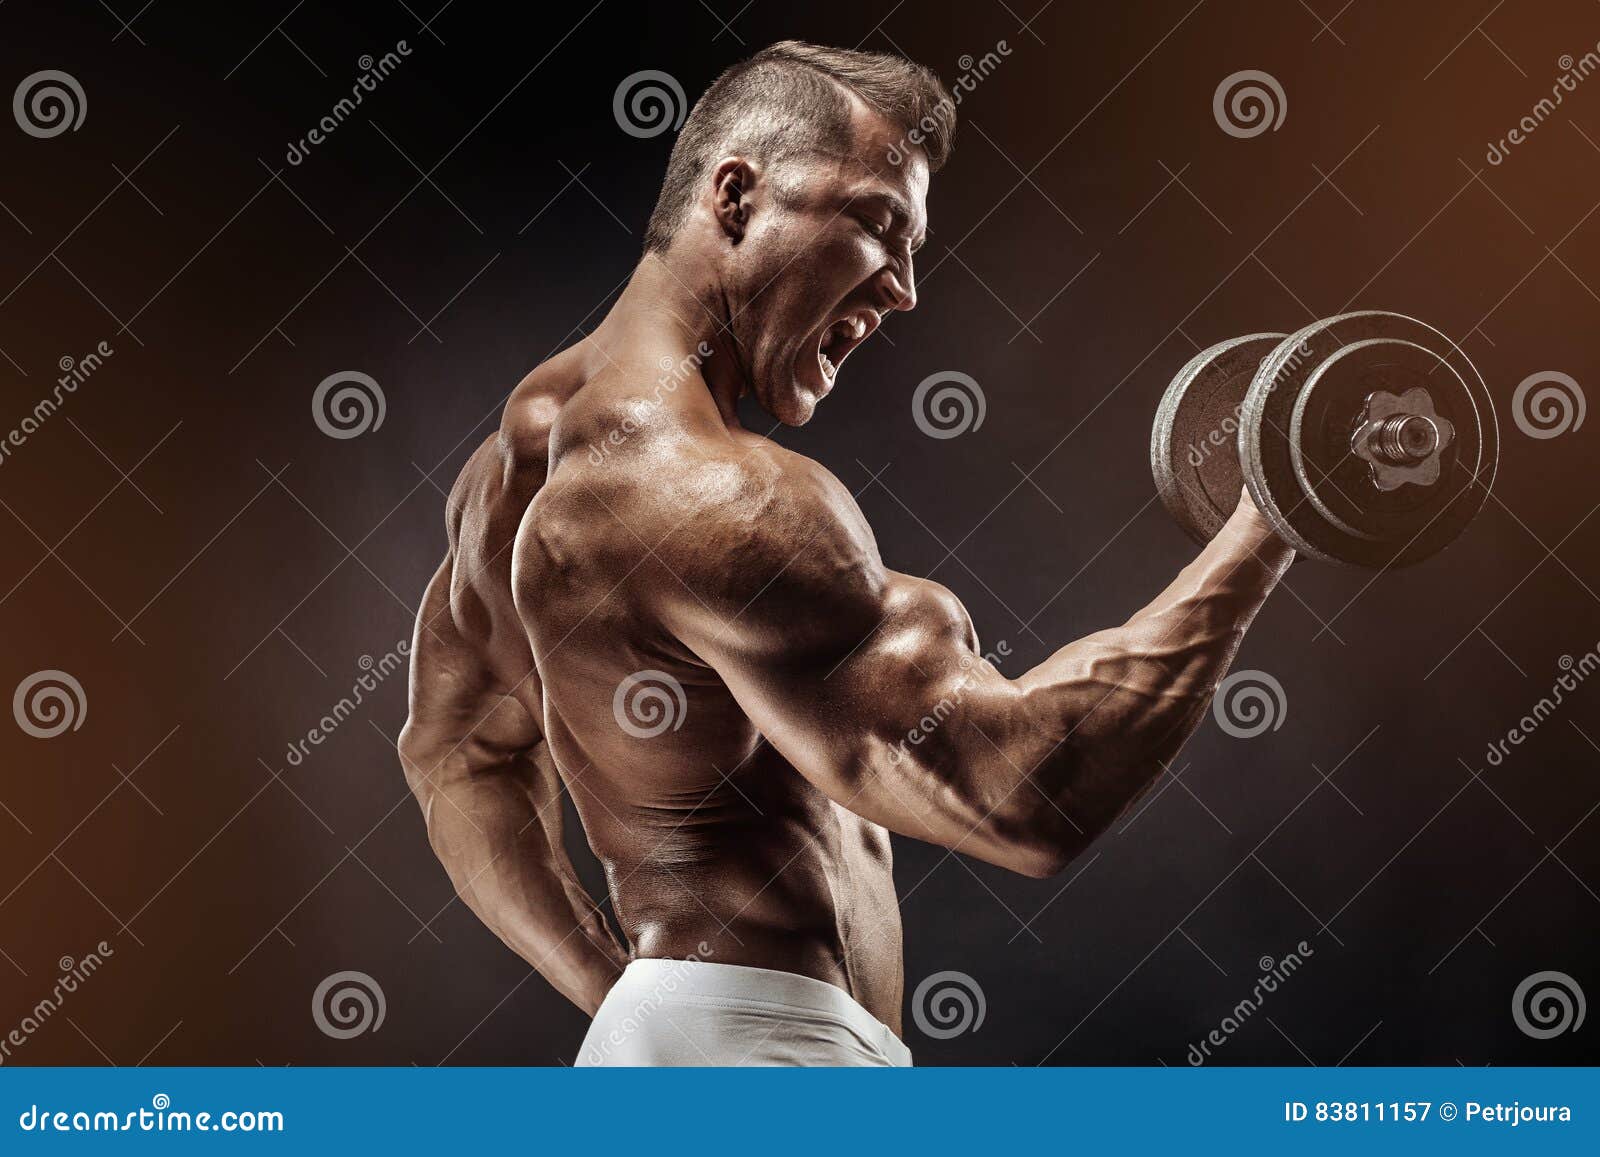 muscular bodybuilder guy doing exercises with dumbbell